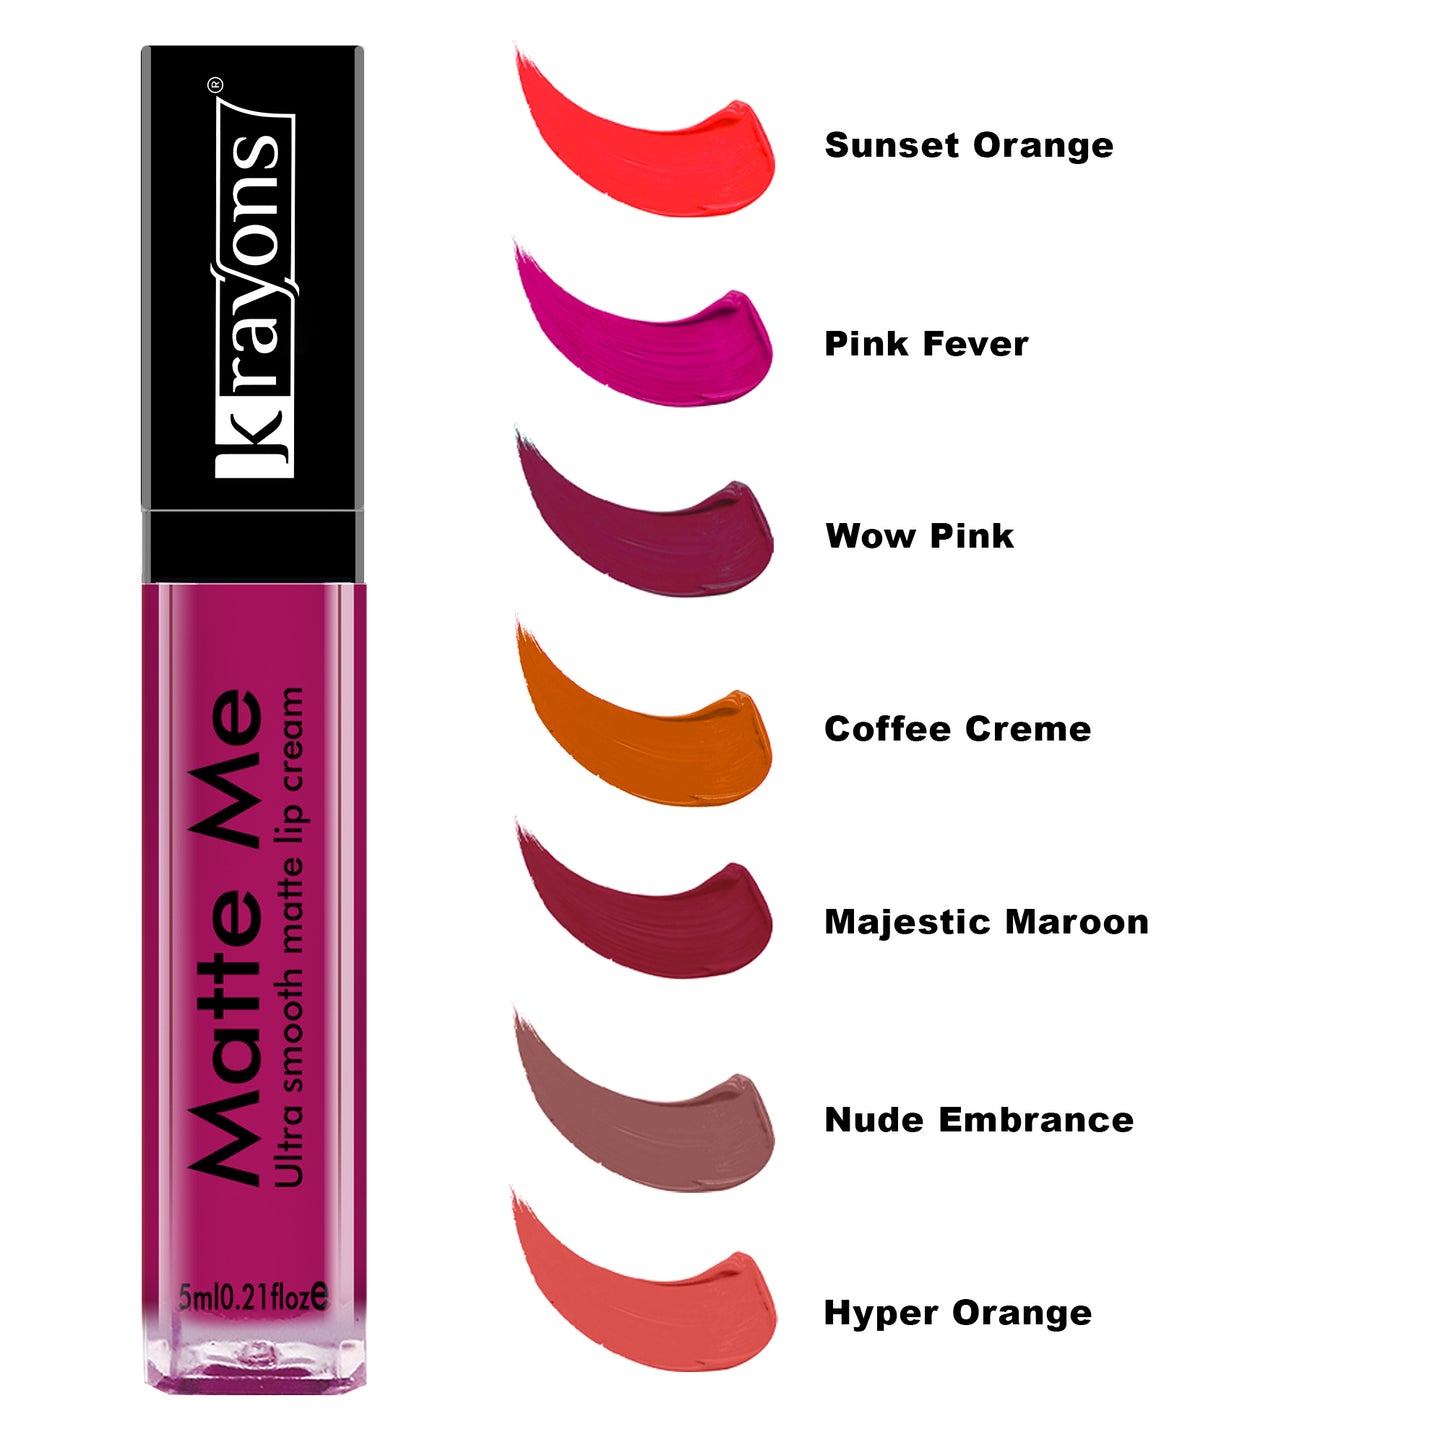 Krayons Matte Me Ultra Smooth Matte Liquid Lip Color, Mask Proof, Waterproof, Longlasting, 5ml (Wow Pink)